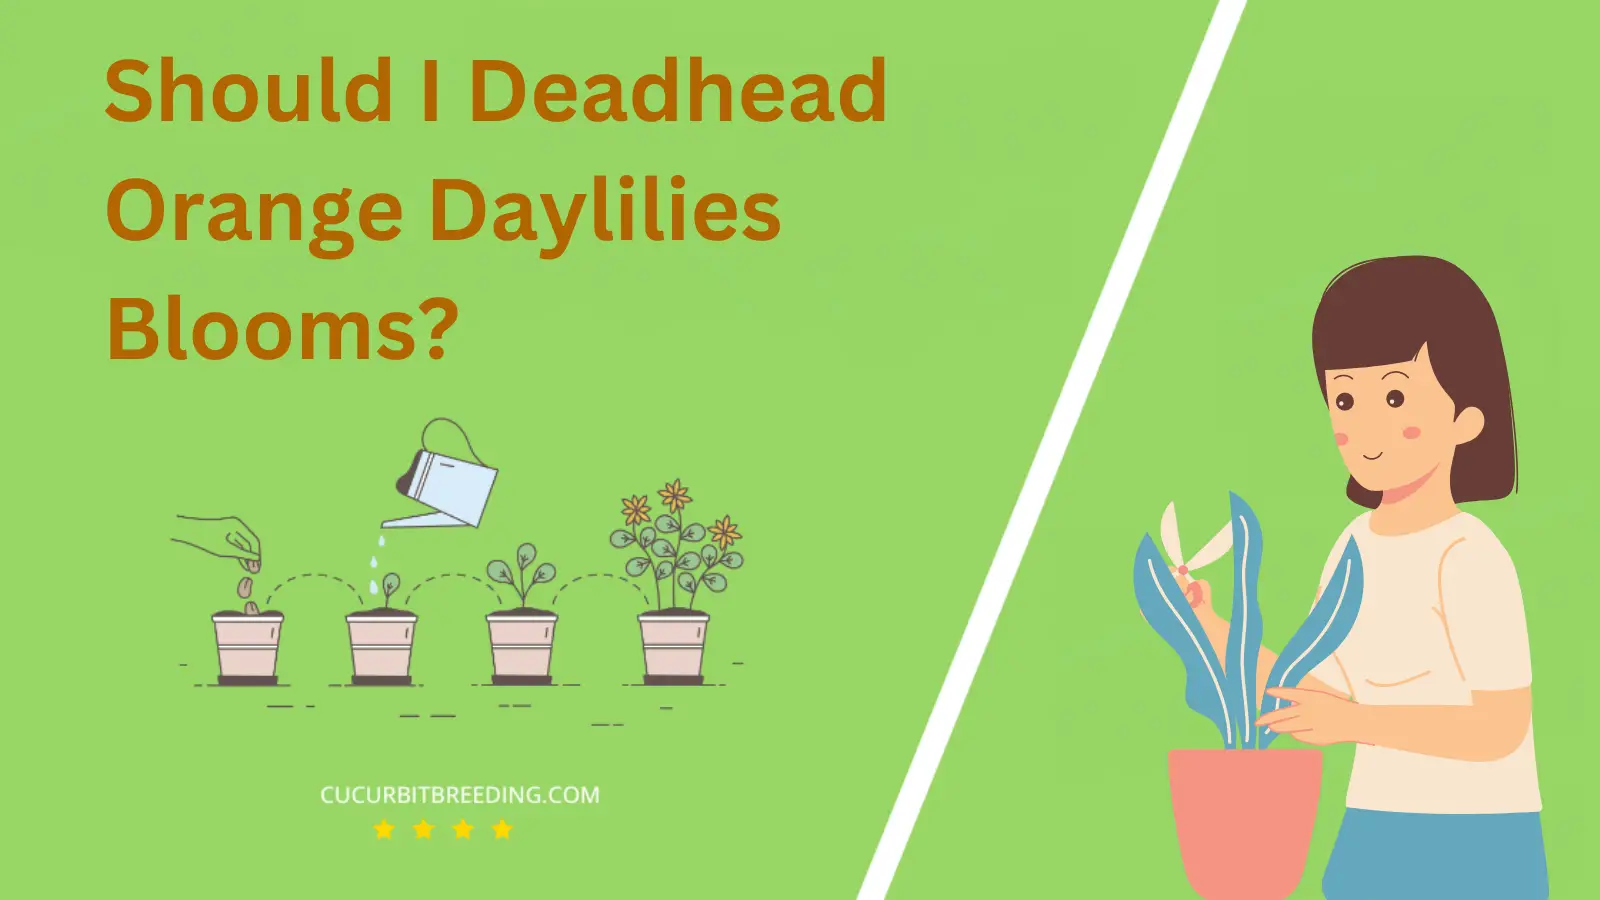 Should I Deadhead Orange Daylilies Blooms?